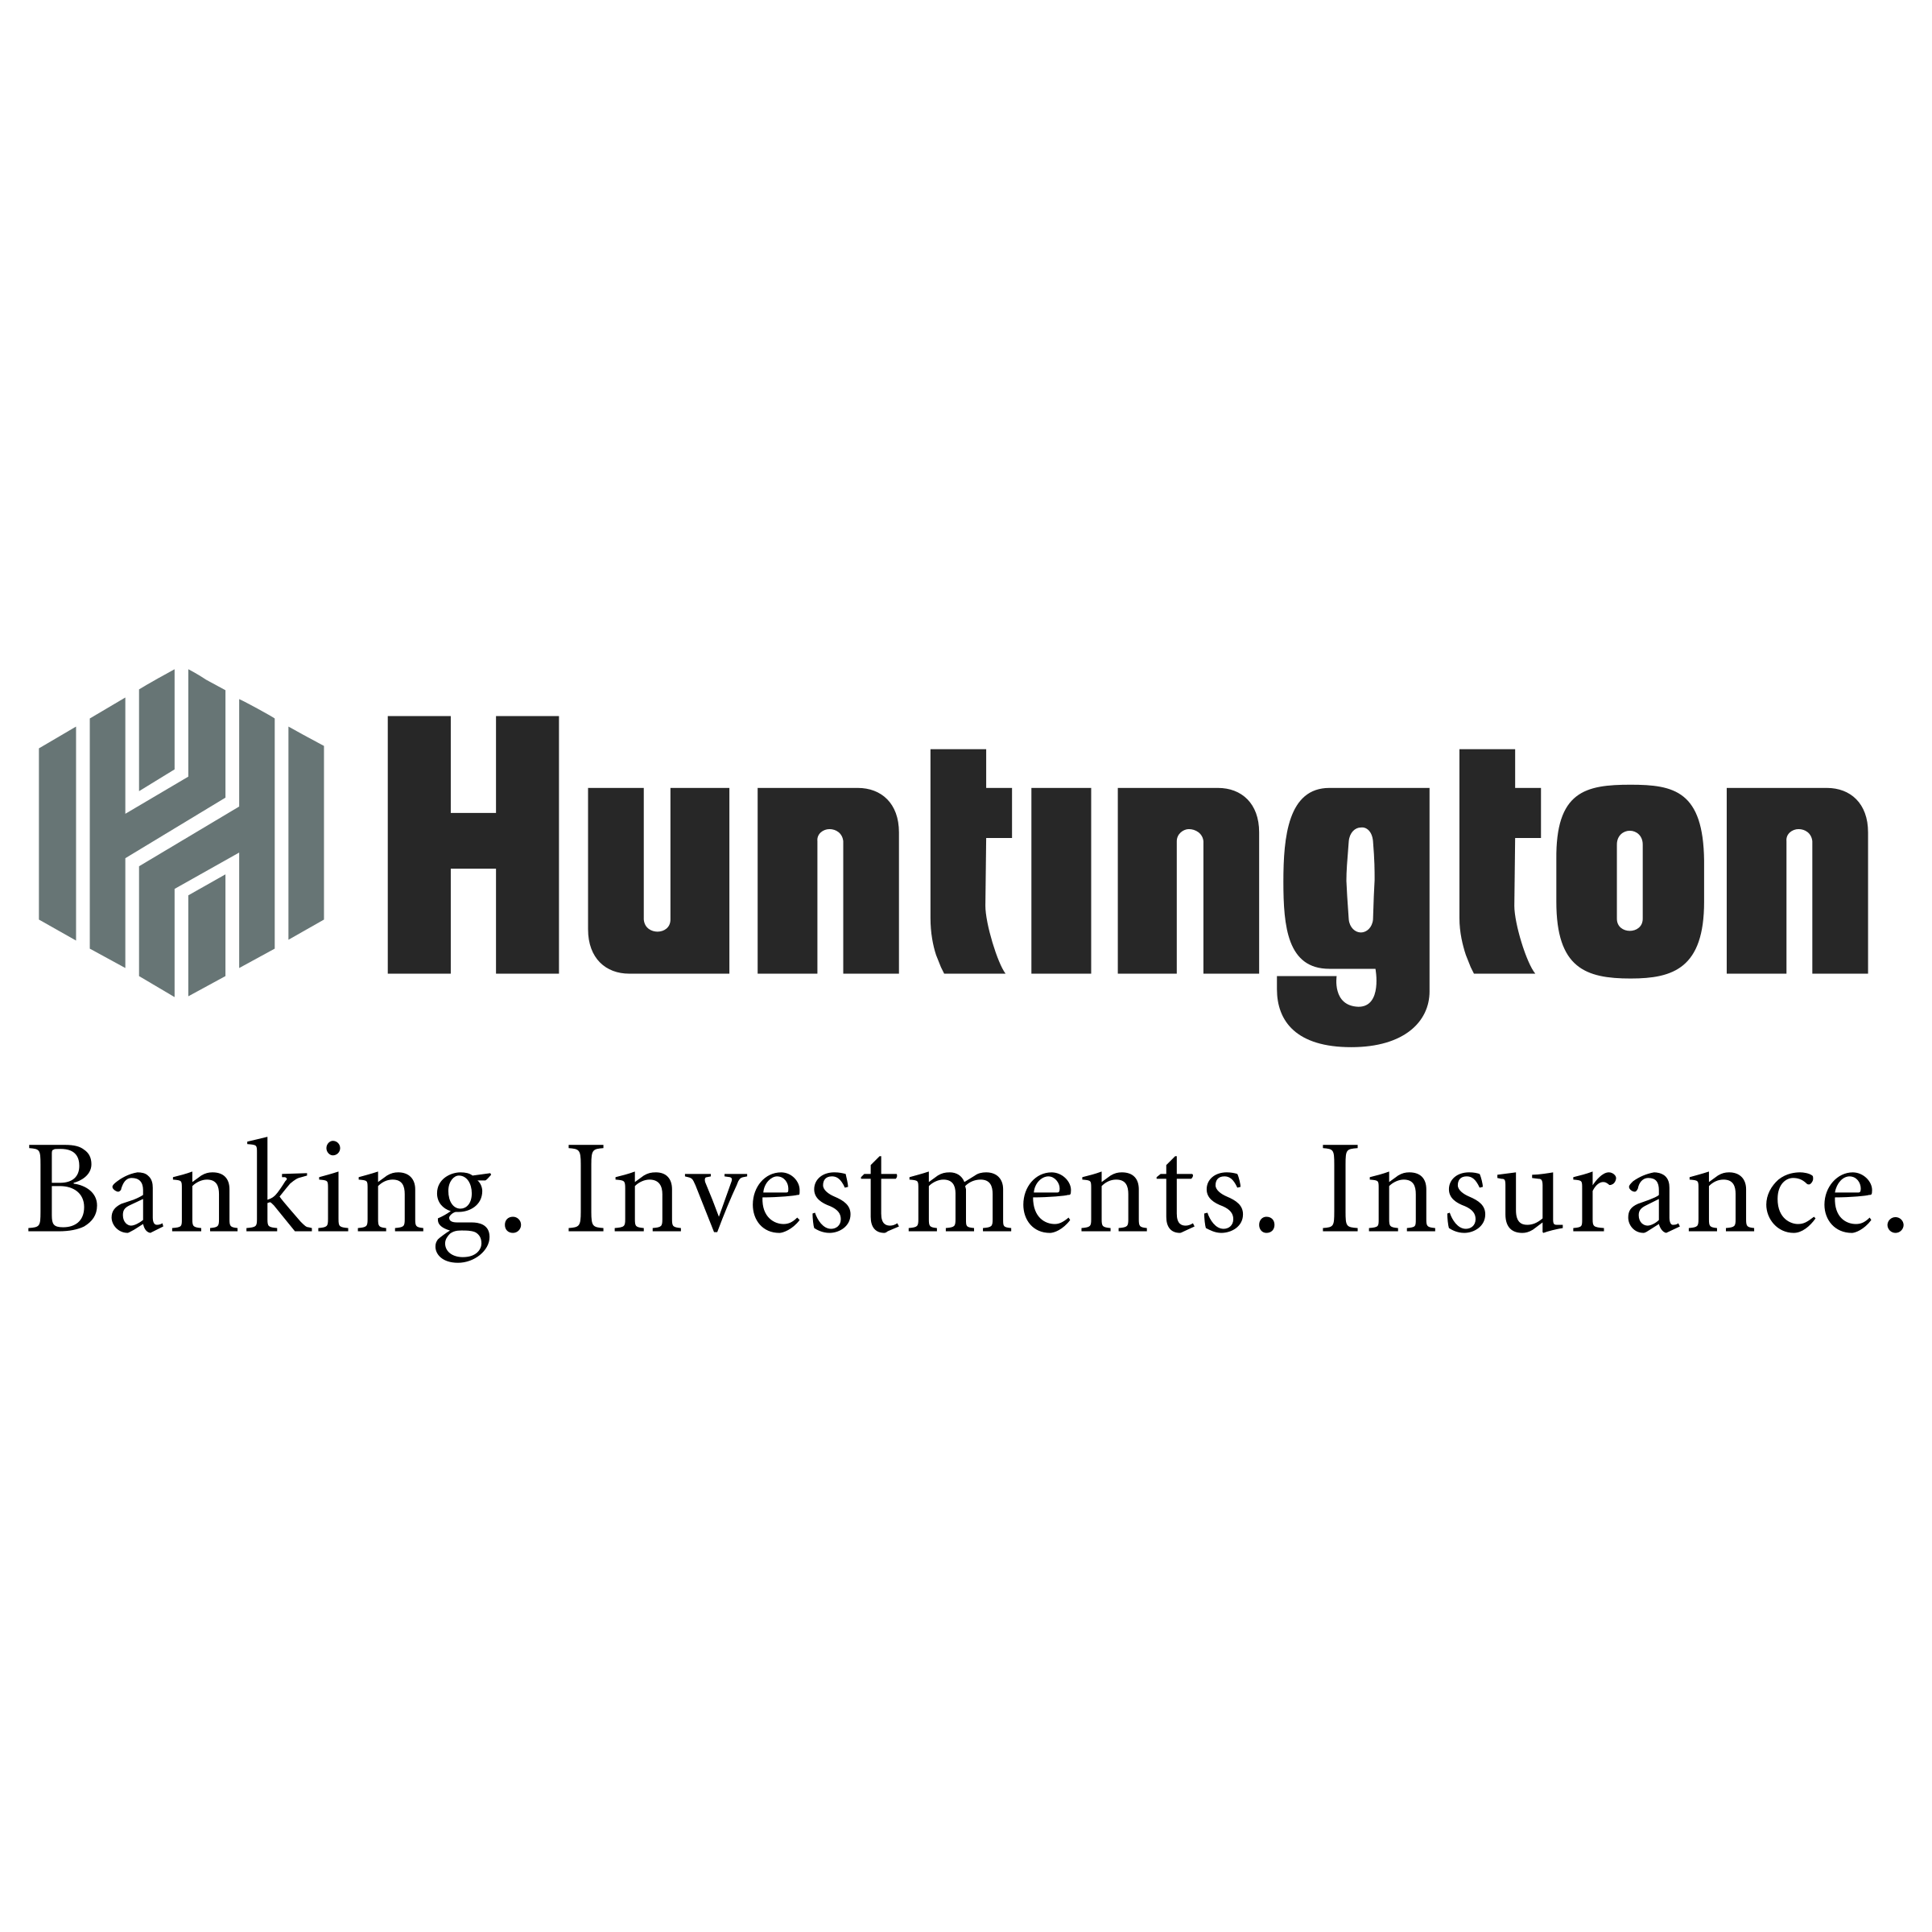 Huntington Logo - Huntington Logo PNG Transparent & SVG Vector - Freebie Supply